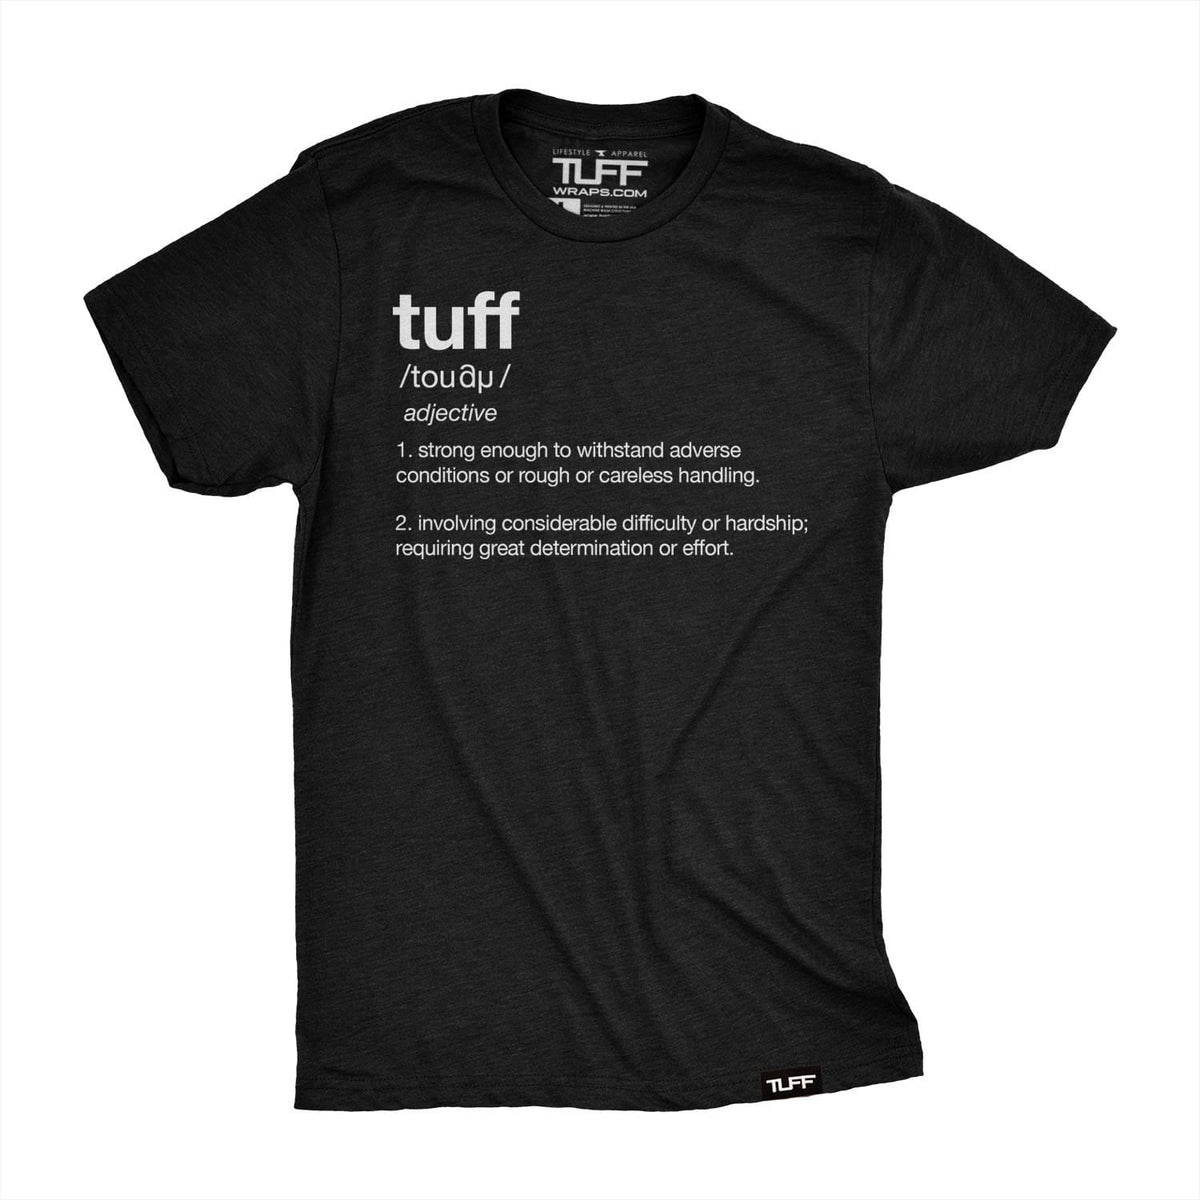 Tuff Definition Tee S / Black TuffWraps.com